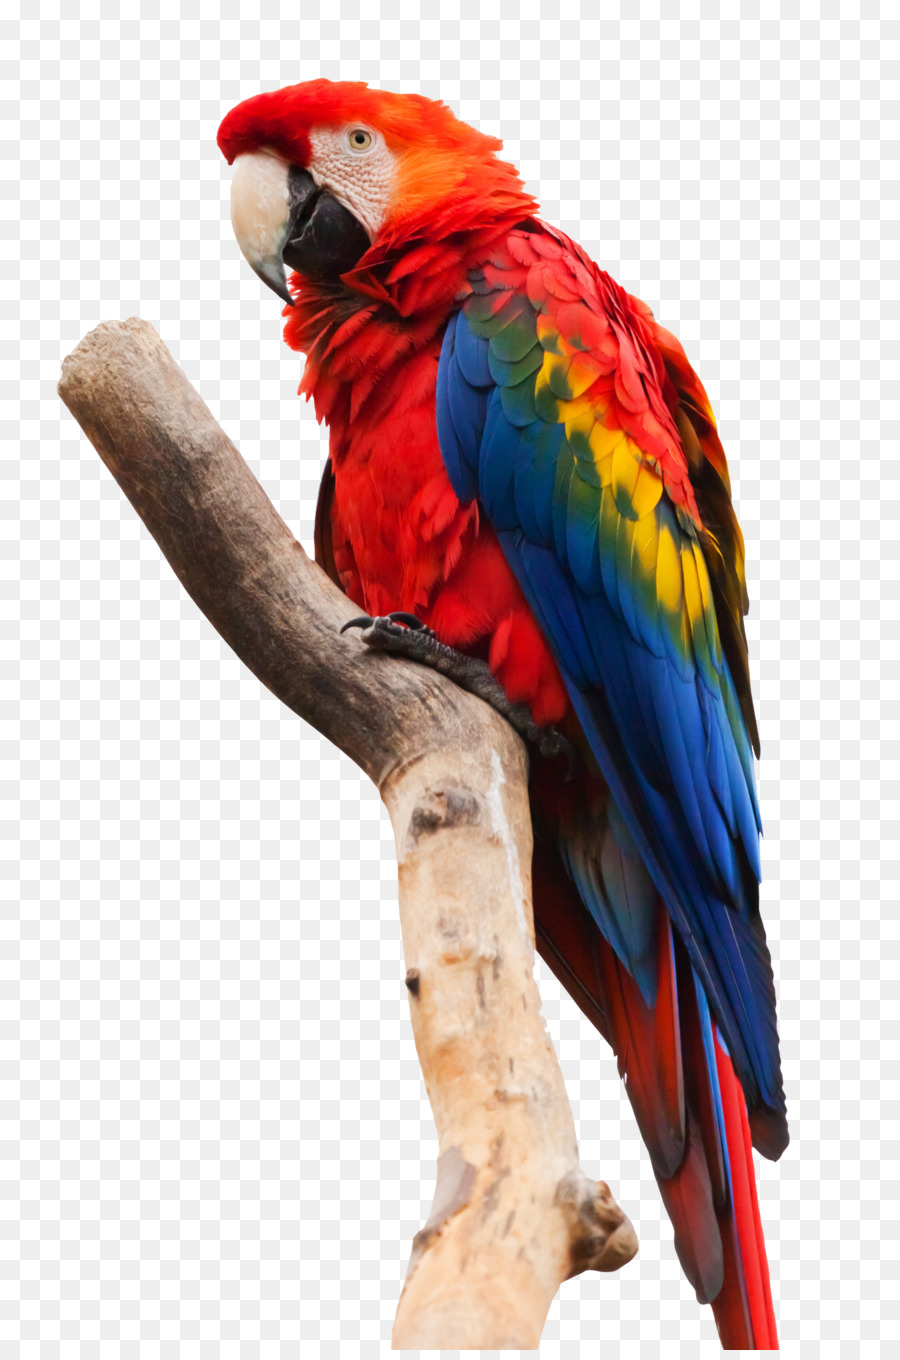 Bird Macaw png download - 1350*2025 - Free Transparent Bird png Download.